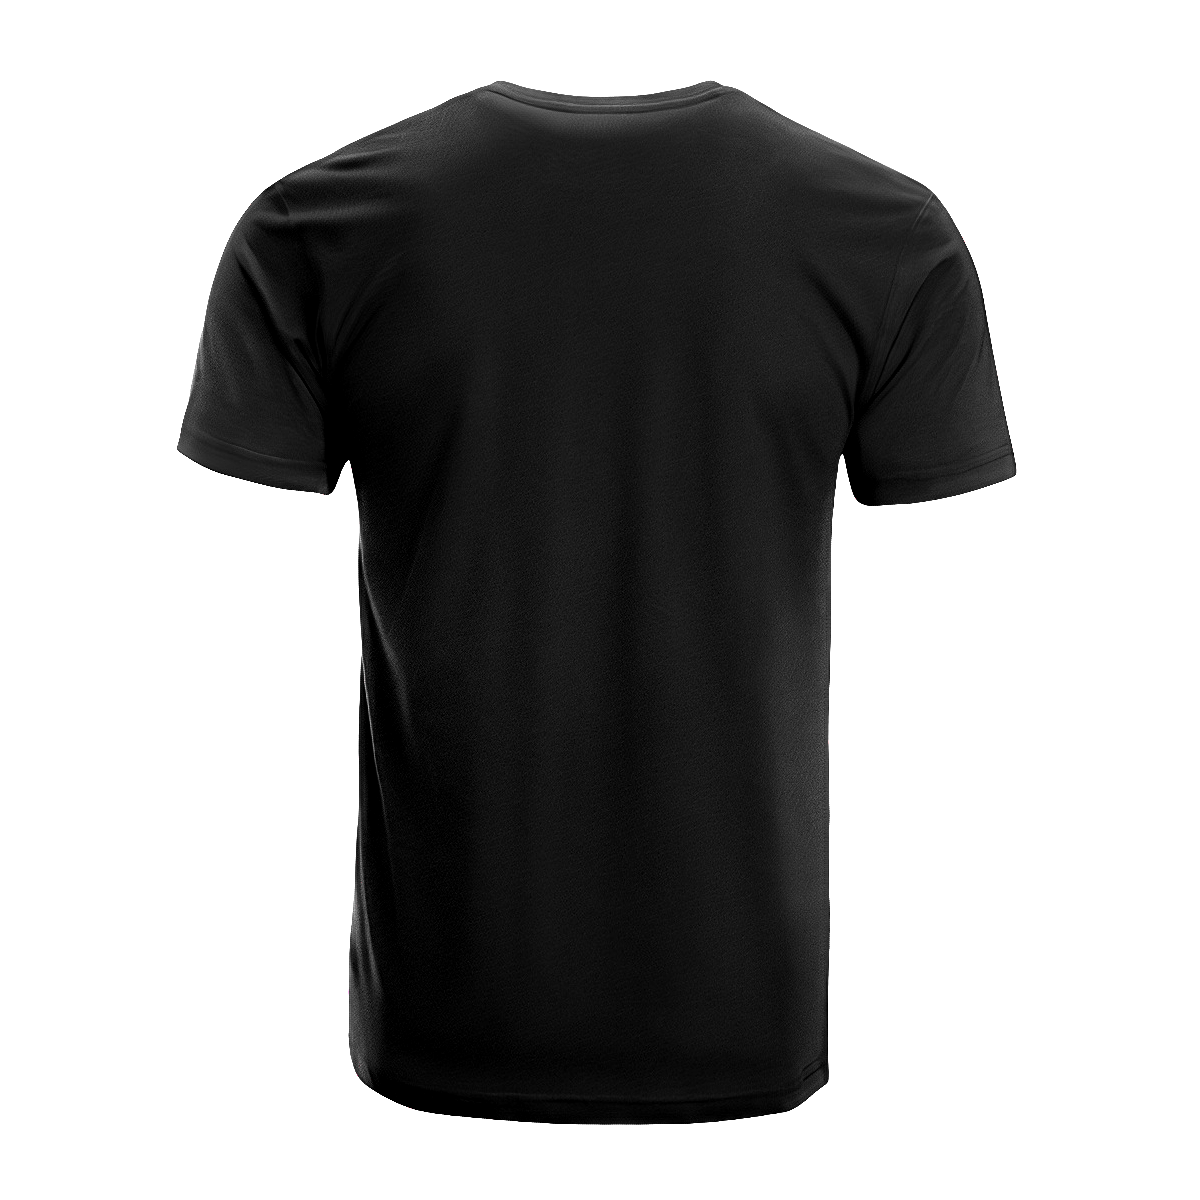 Gillies Tartan Crest T-shirt - I'm not yelling style